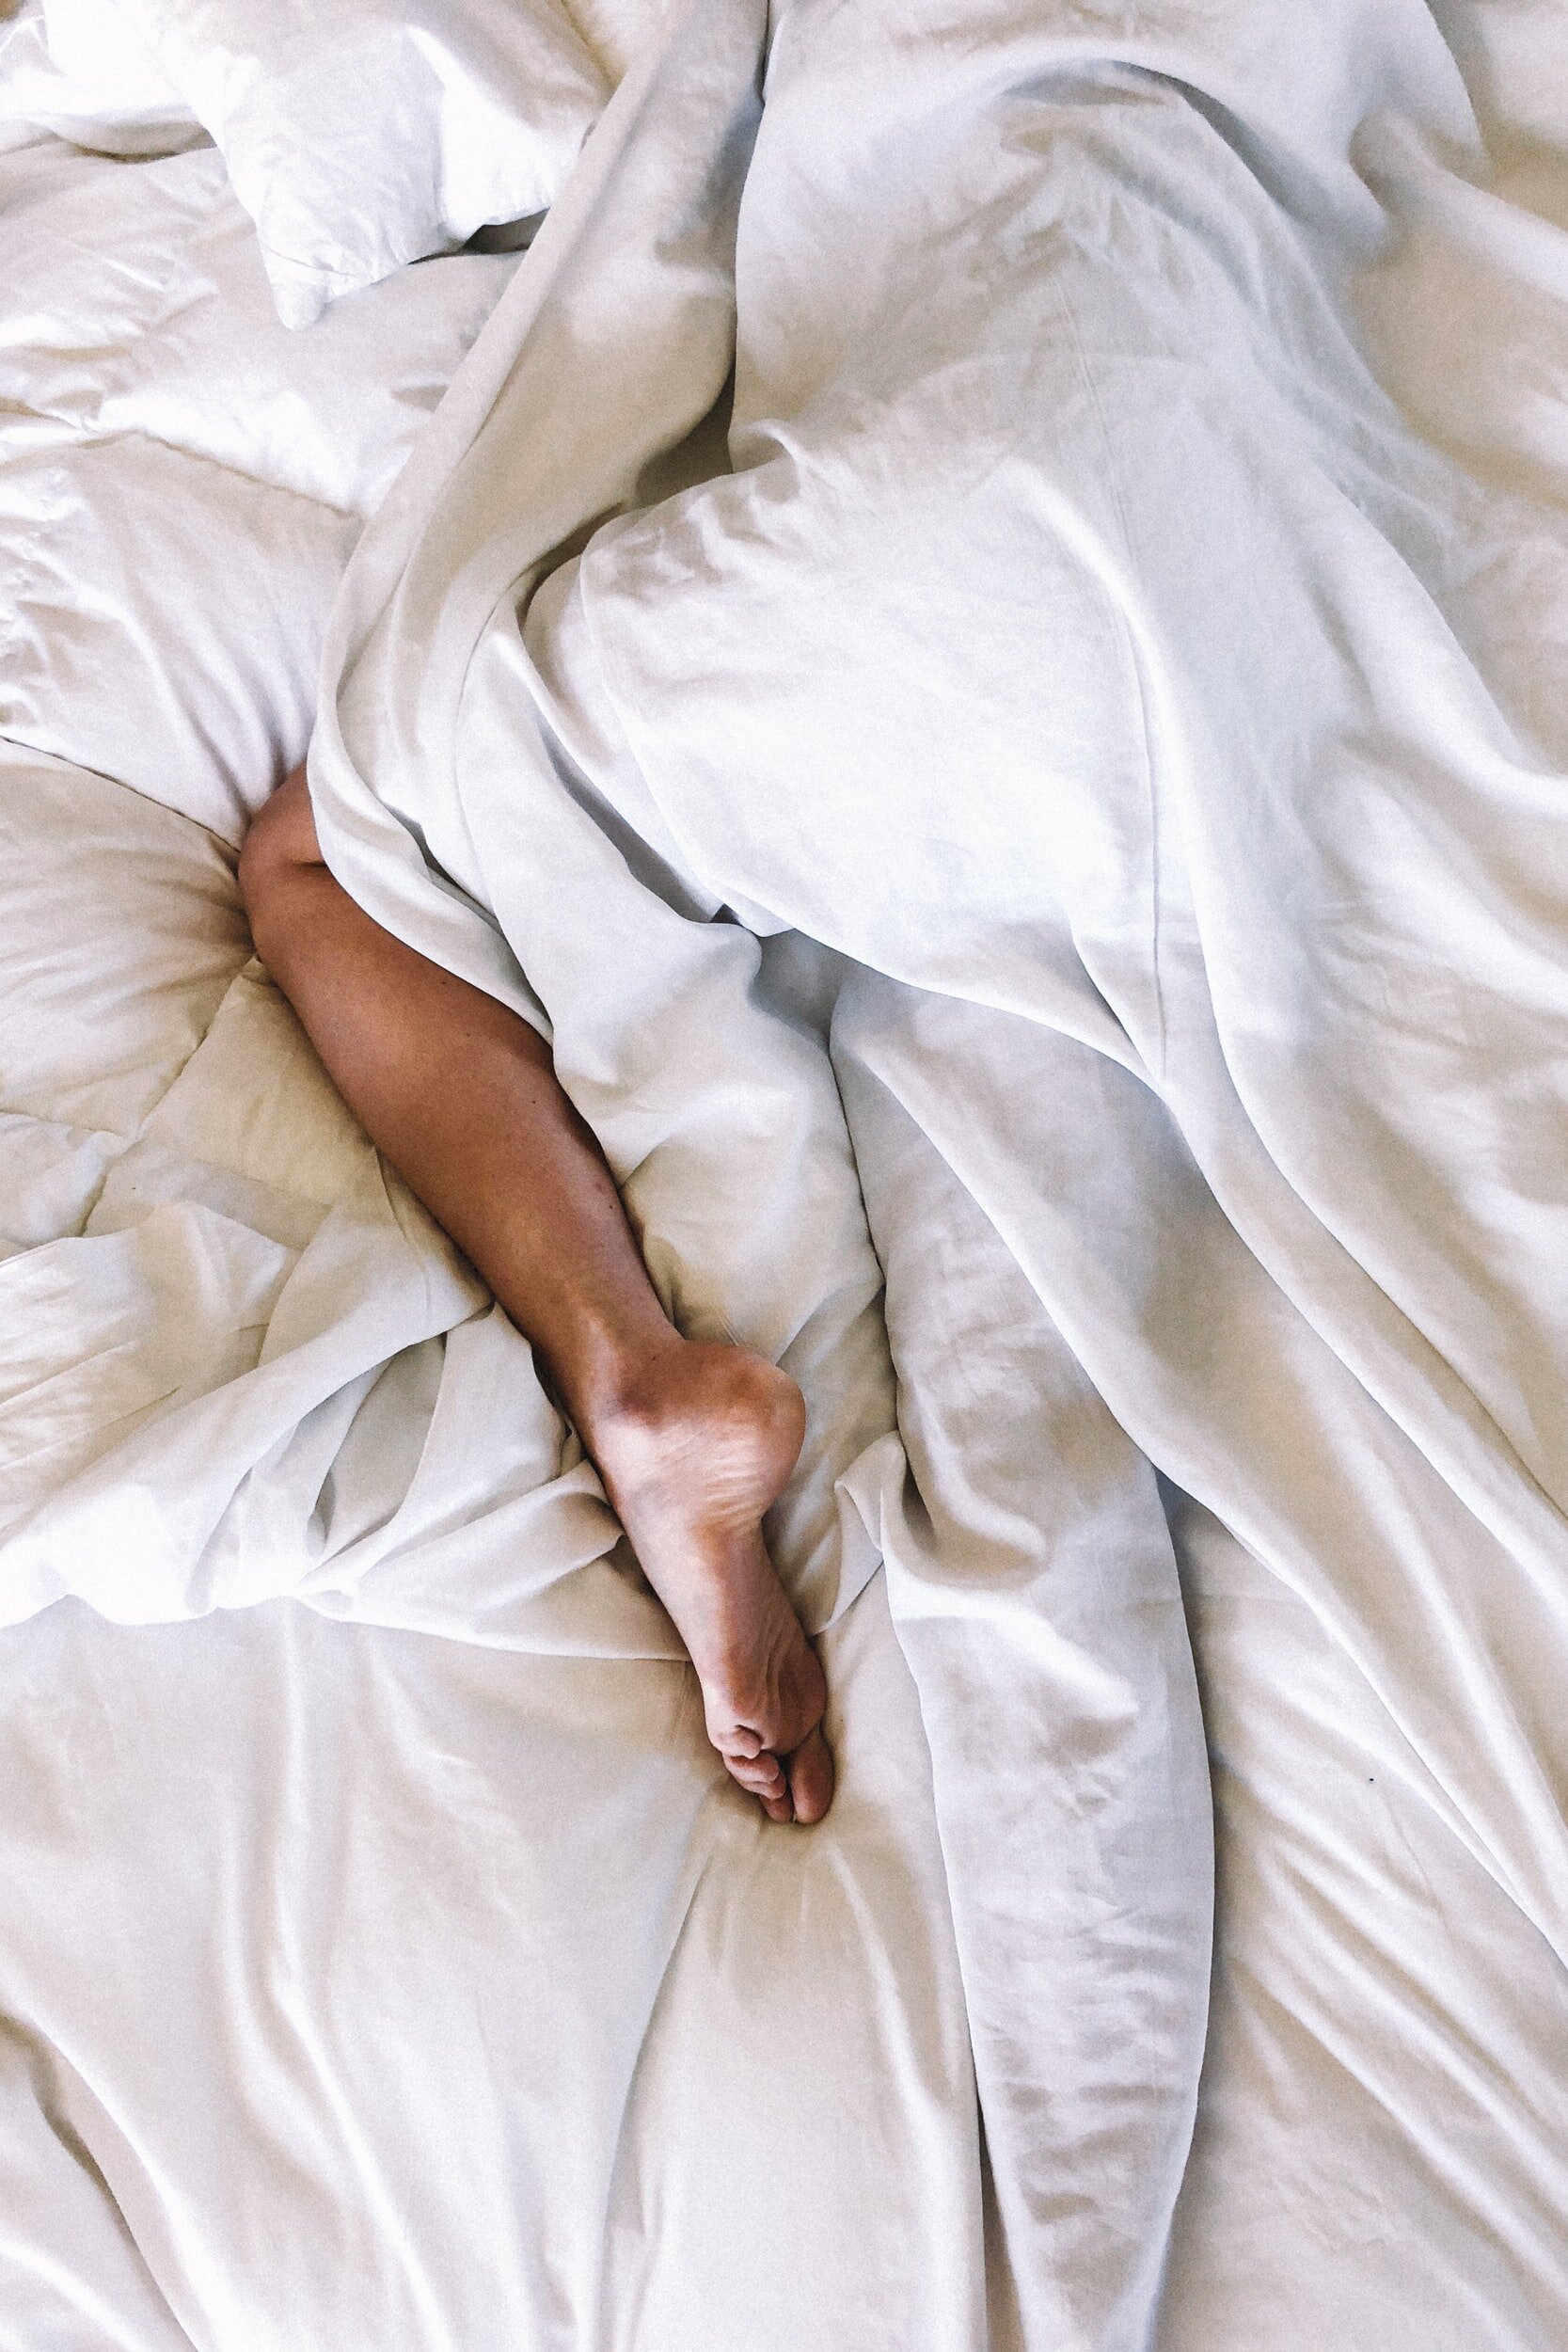 how to get good sleep as an adult tips